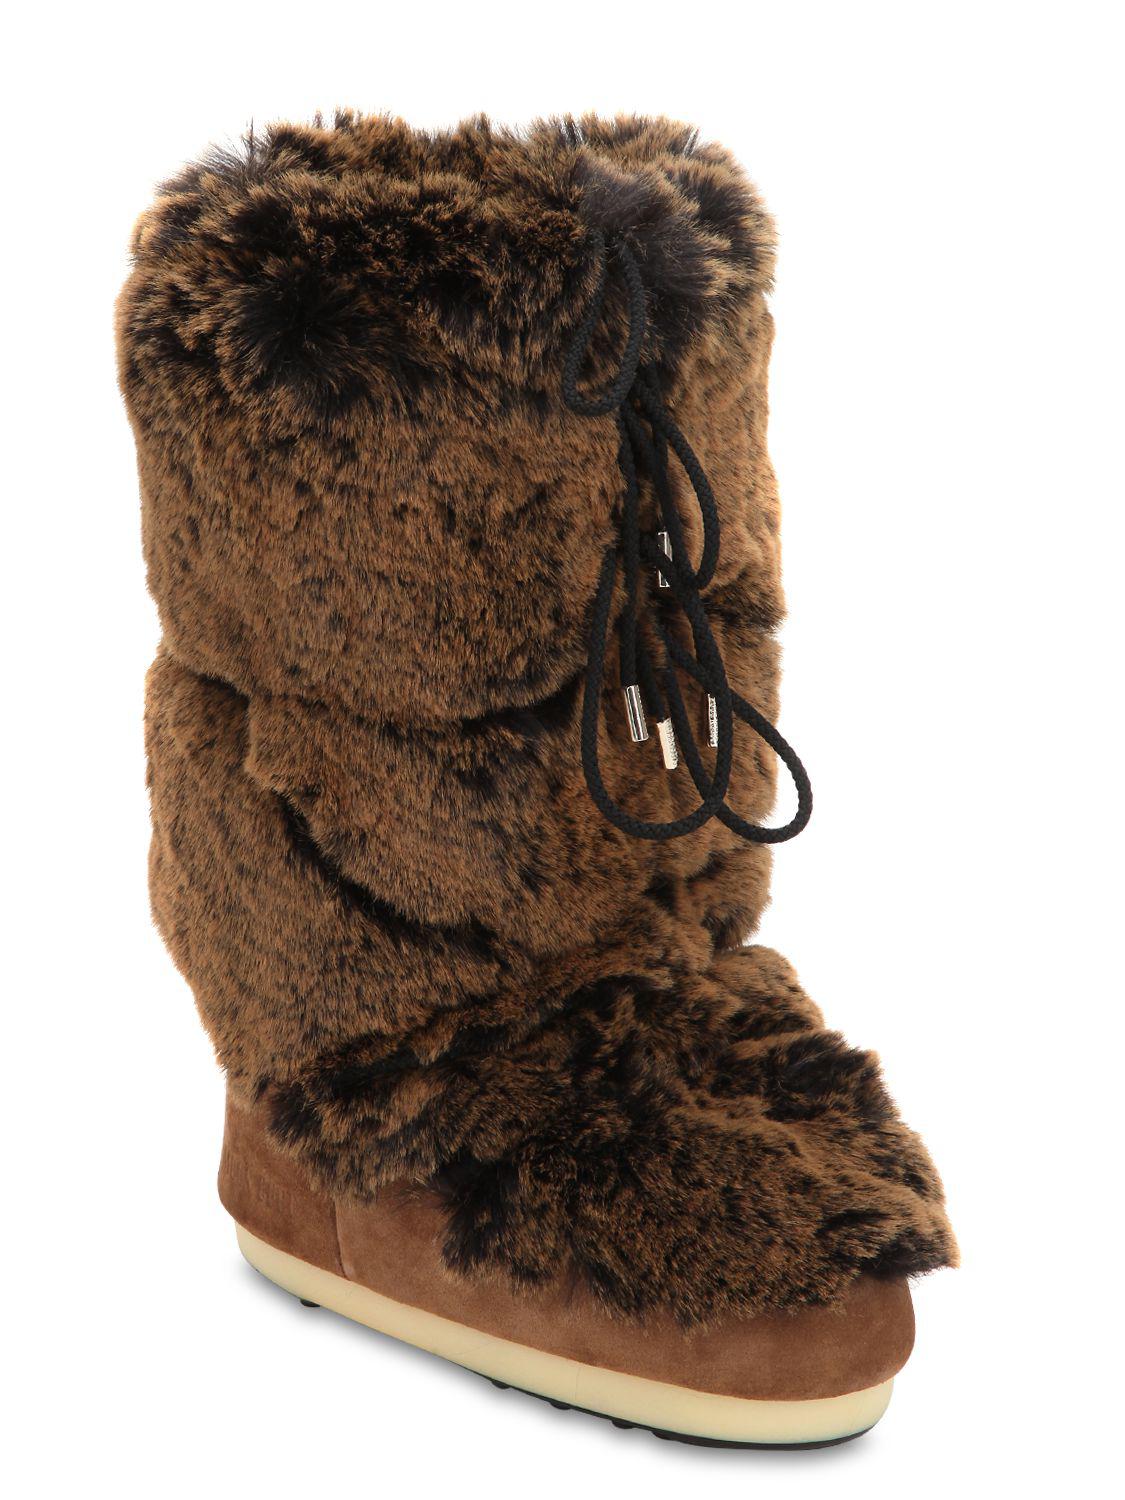 Buy > london fog ashford 2 men's winter boots > in stock